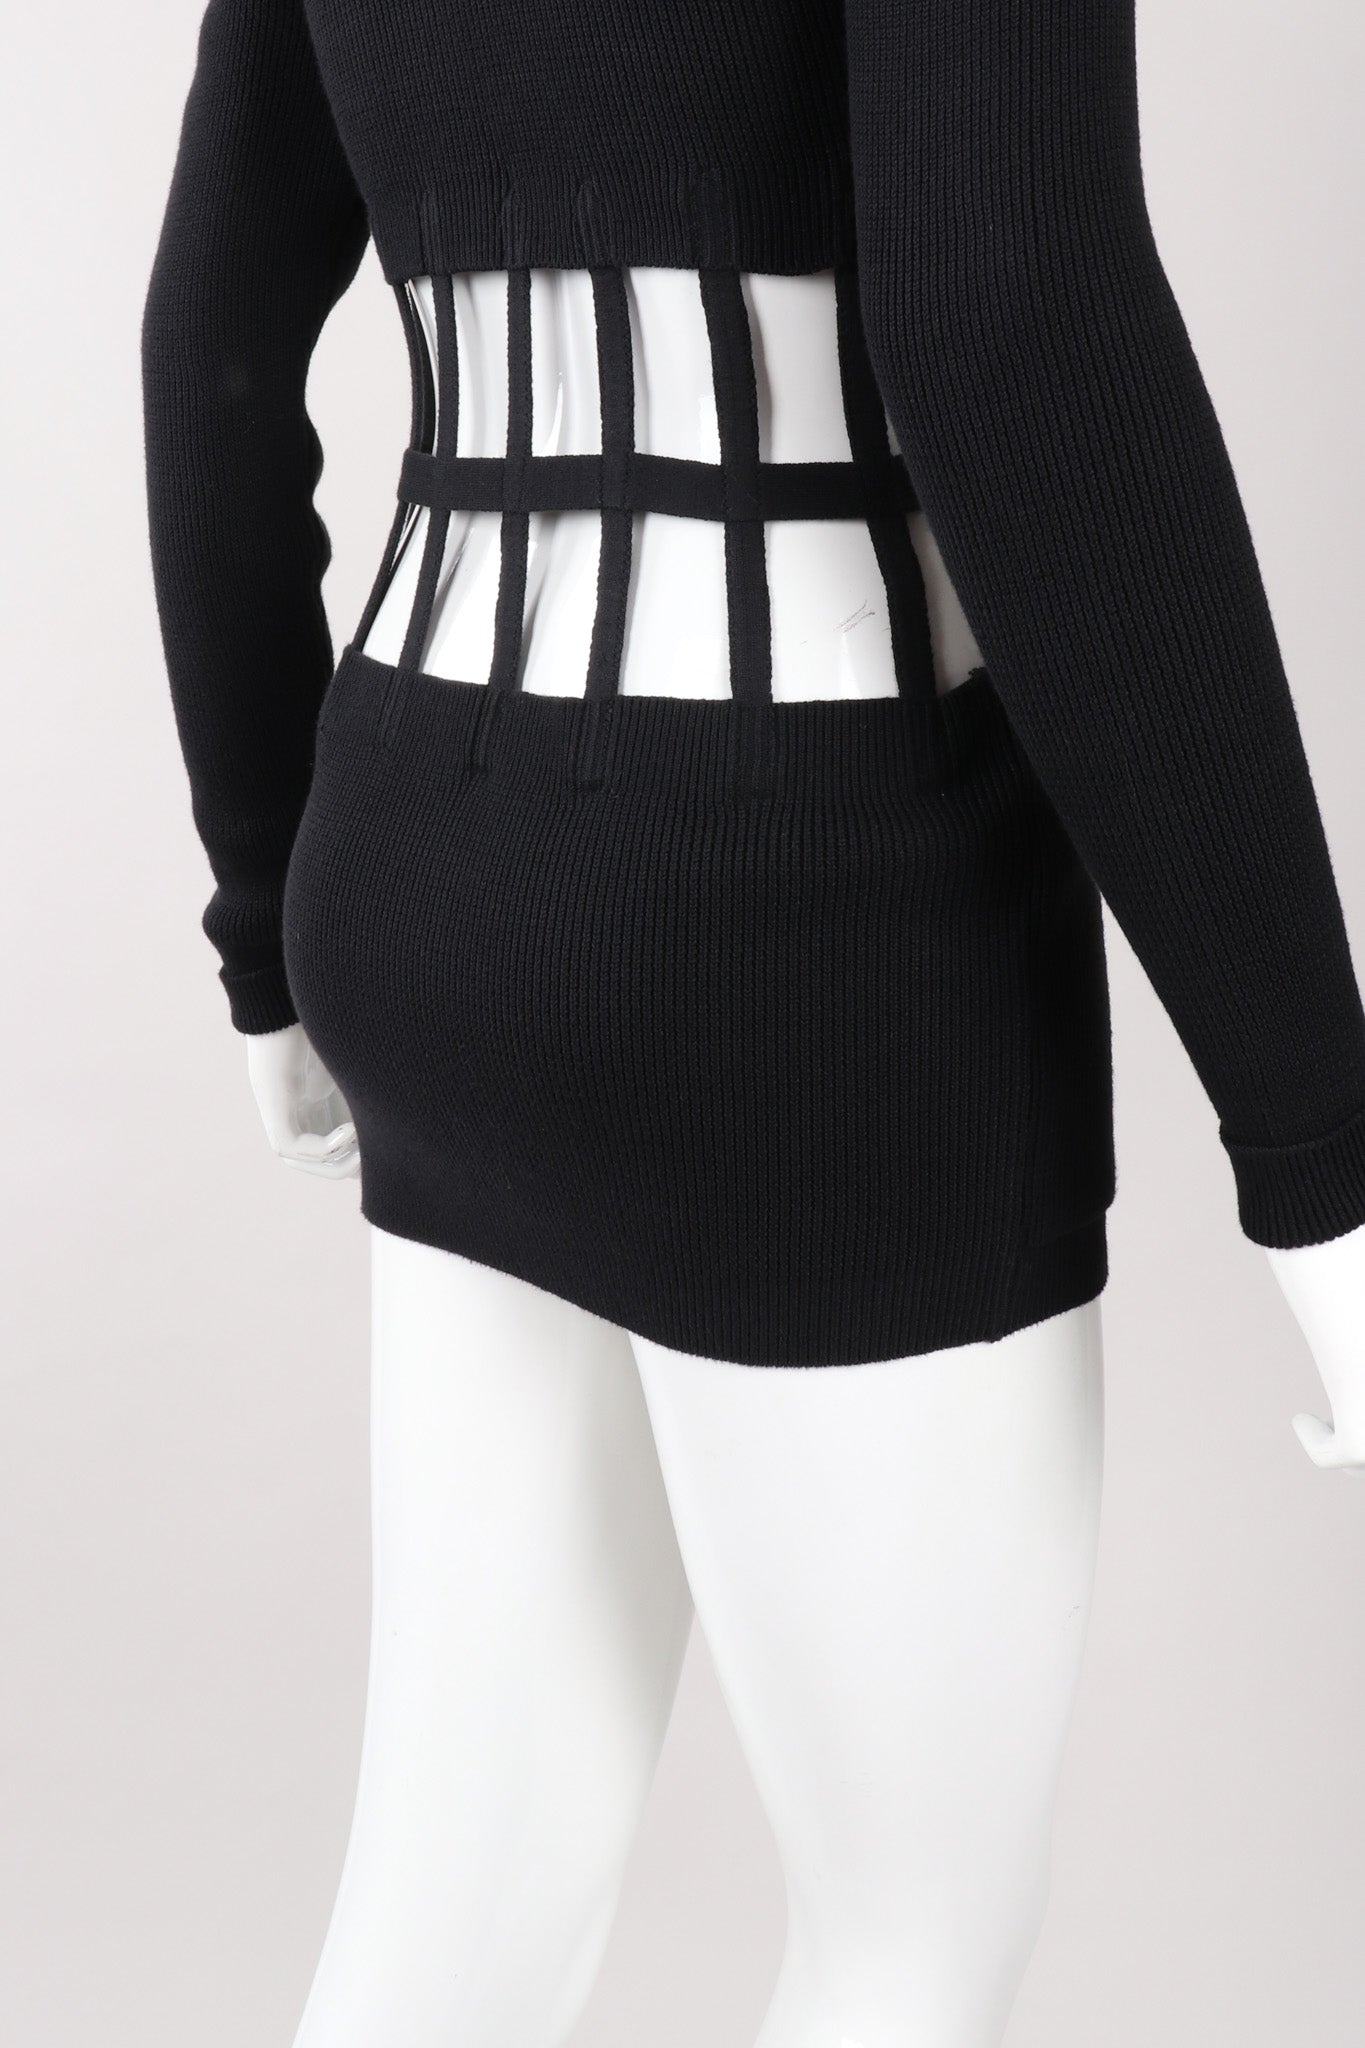 Recess Los Angeles Vintage Jean Paul Gaultier Corset Cage Cardigan Sweater